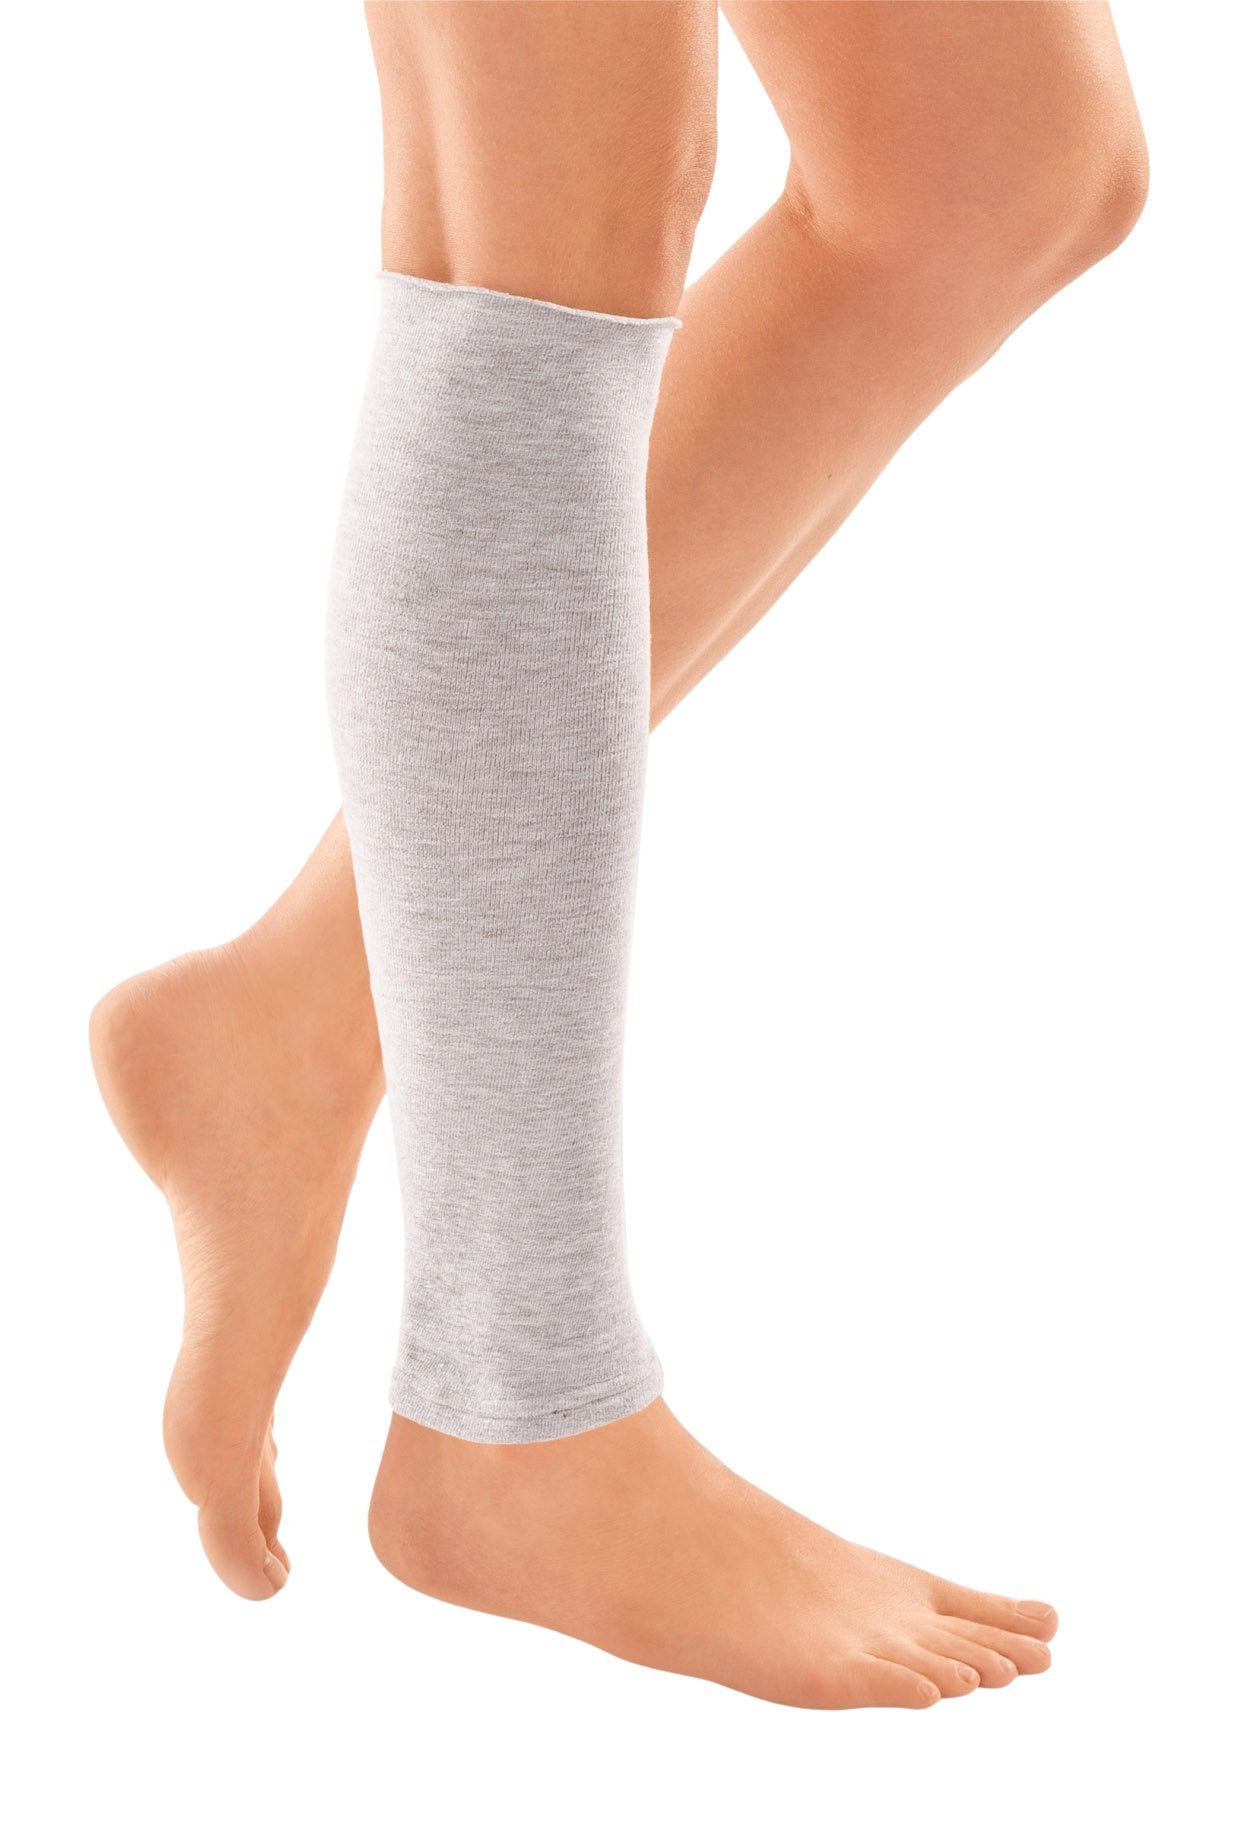 circaid Silver Liner Undersleeve - Leg